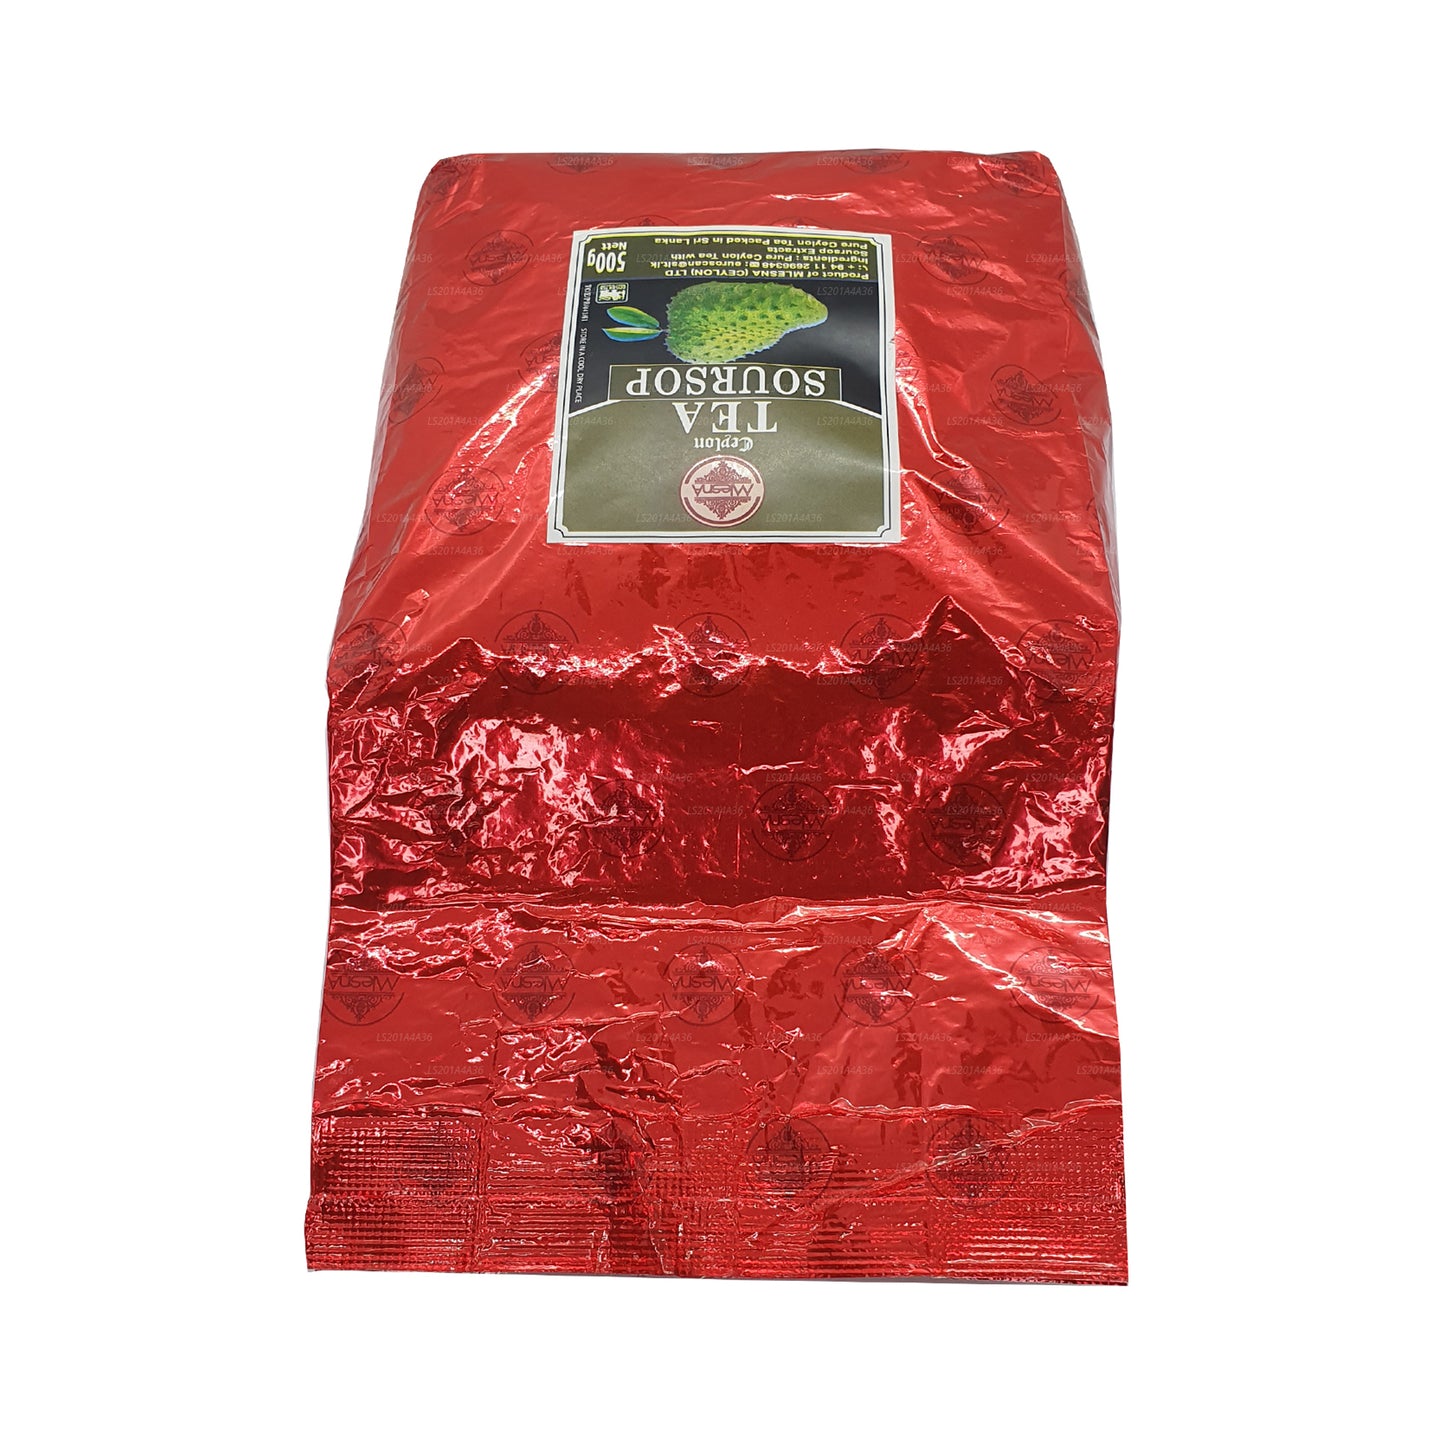 Mlesna Ceylon Tea Soursop Schwarztee (500g)